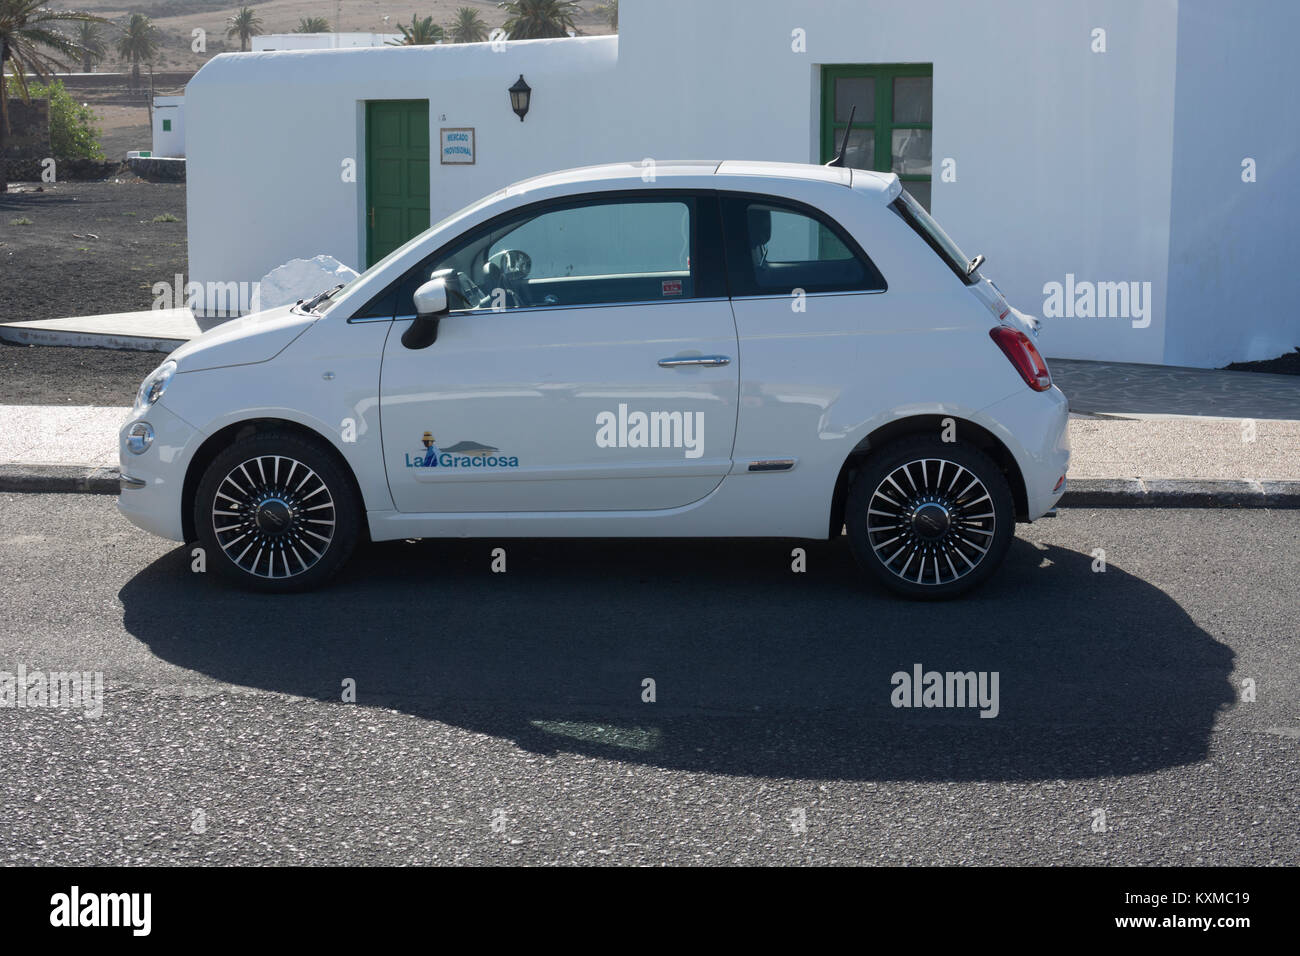 Fiat 500 hire car, Lanzarote, Canary Islands, Spain.. Stock Photo